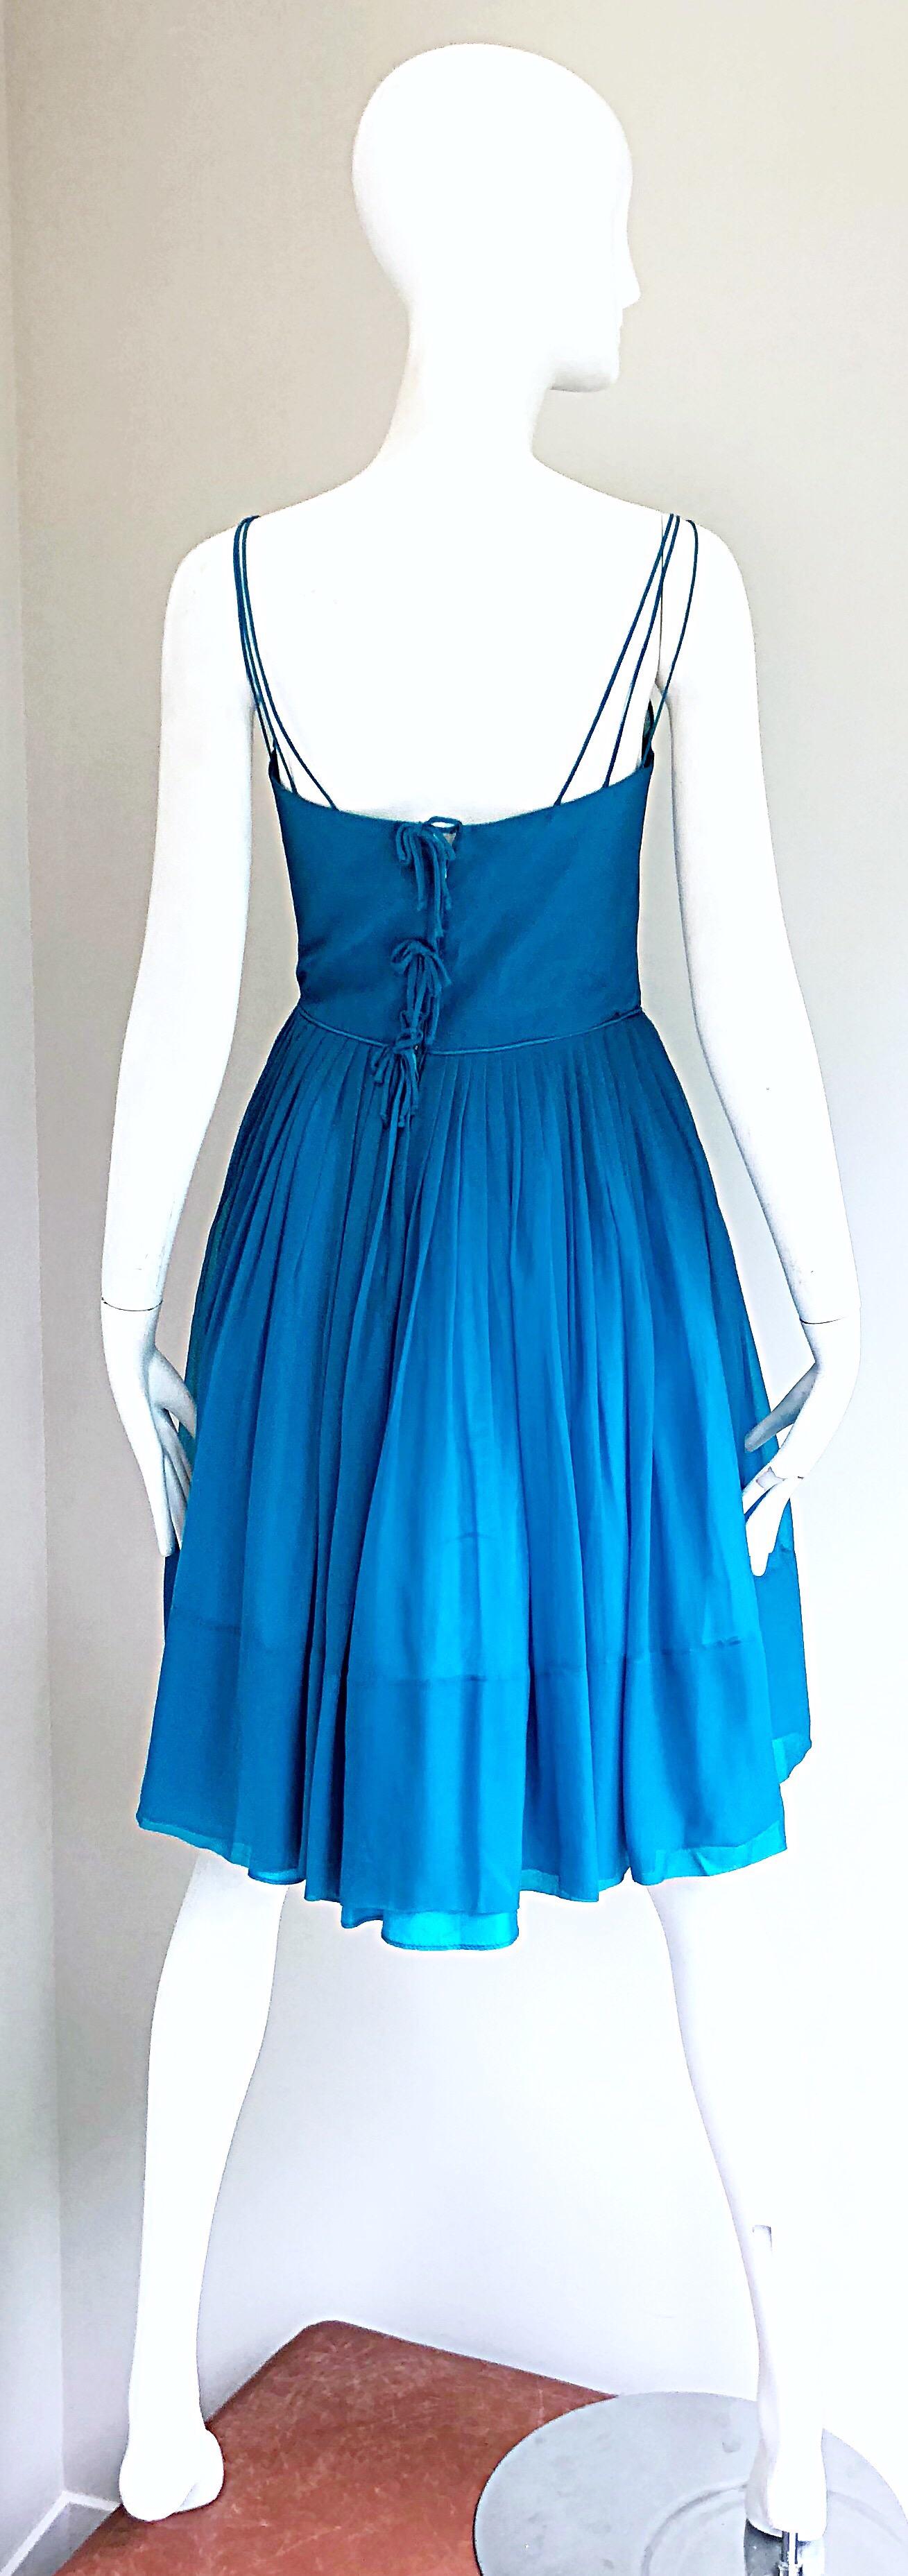 turquoise 50s dress